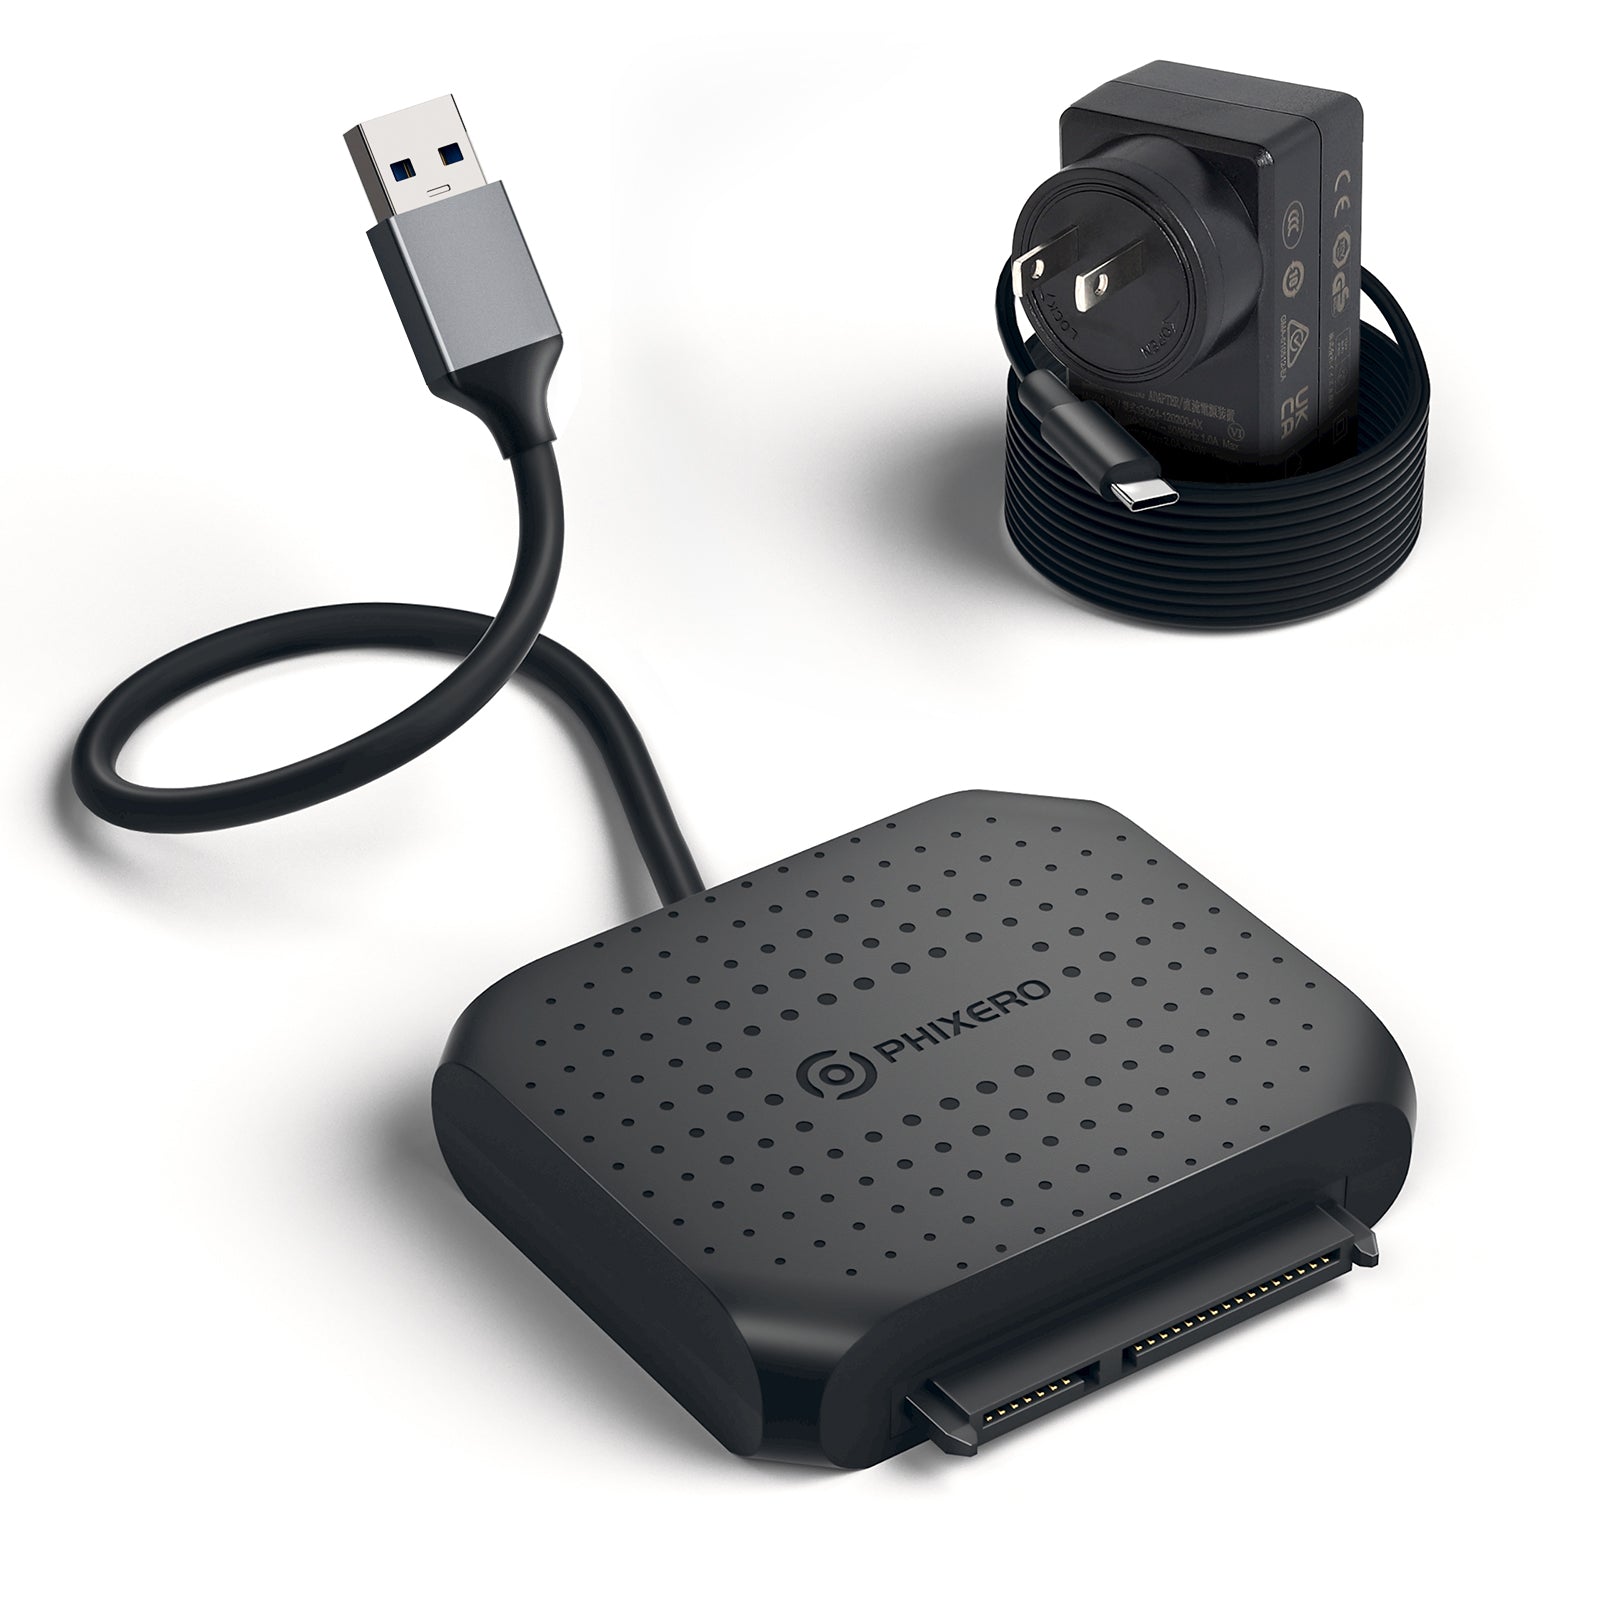 SATA 3 To USB C Adapter Cable USB 3.0 To Sata III Hard Drive Reader Adapter